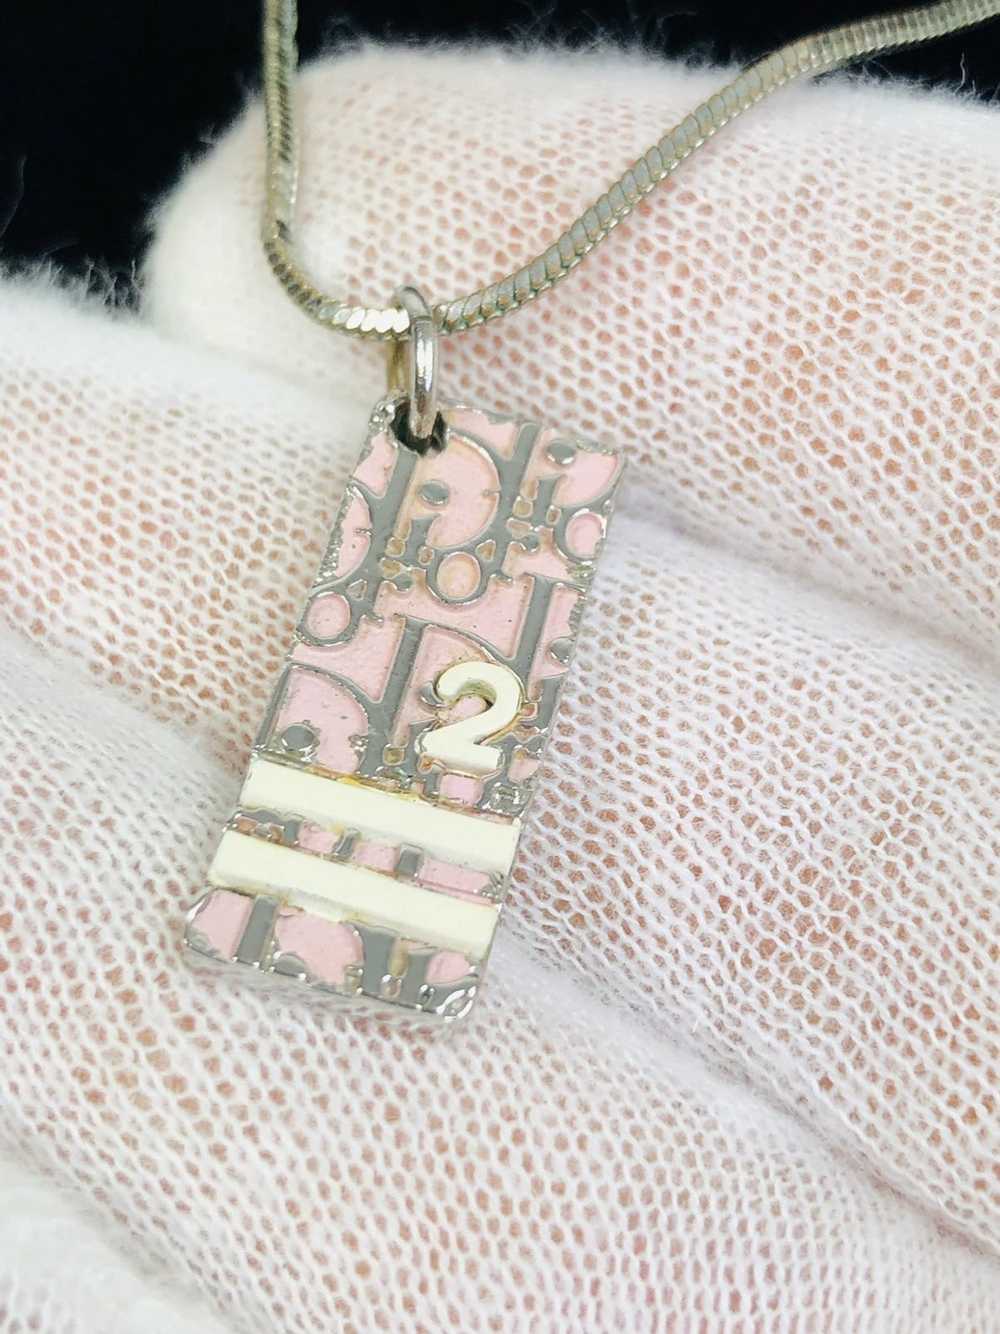 Dior Dior pink trotter 2 necklace - image 2